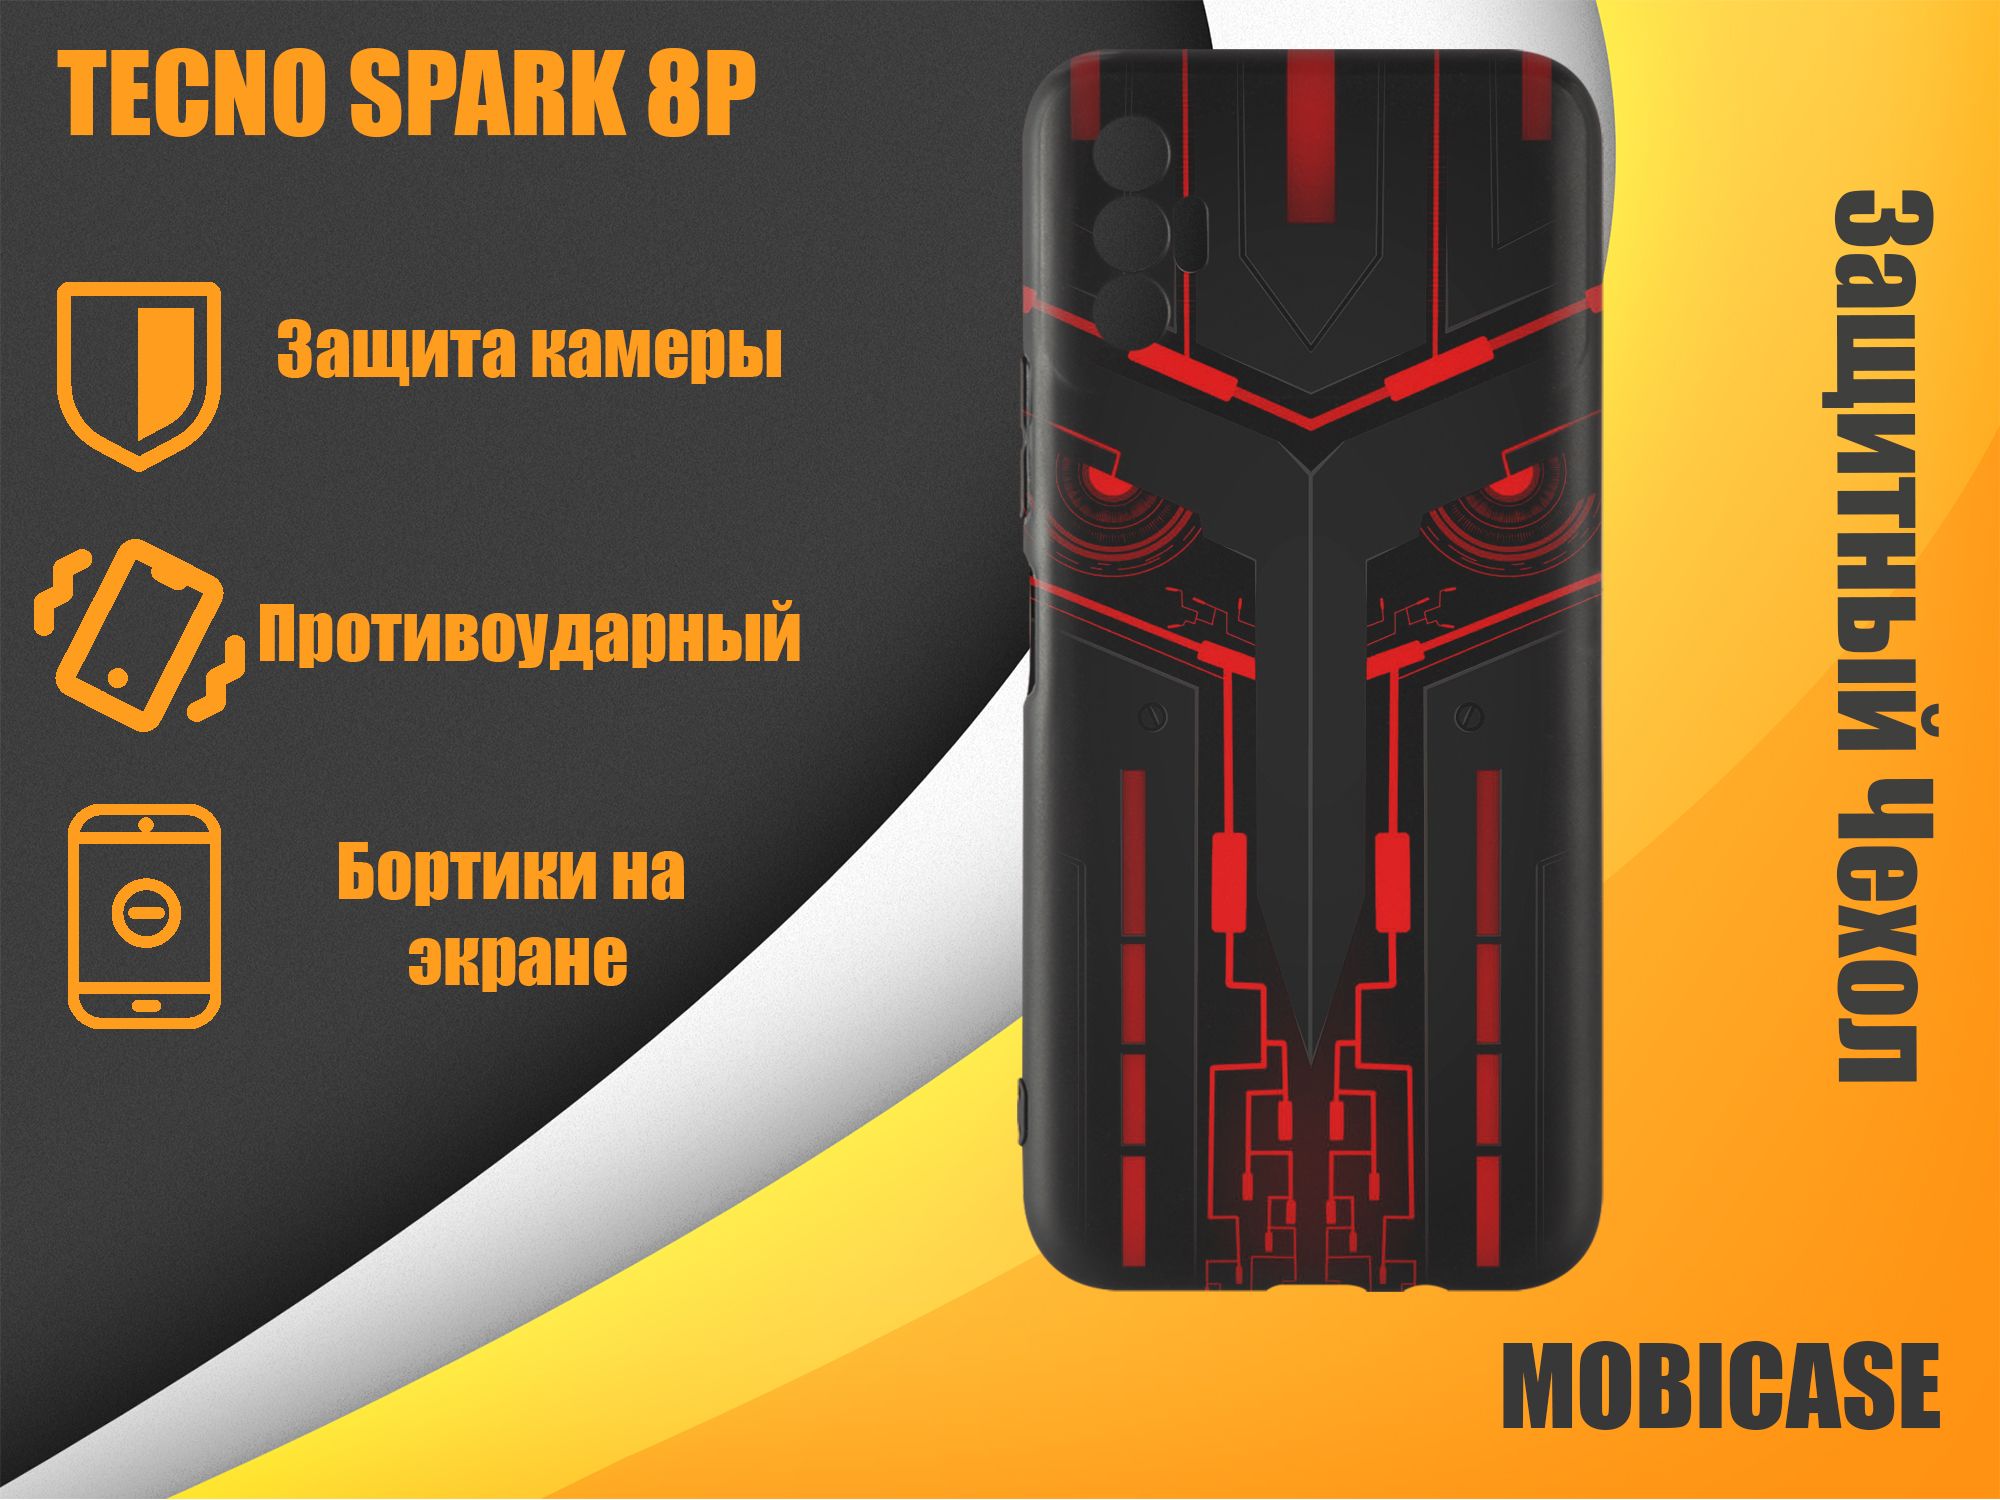 Техно спак 20. Техно Спарк 8п. Techno Spark 8p. Тэхно Спарк 8 п. Tecno Spark 20 Pro чехол.